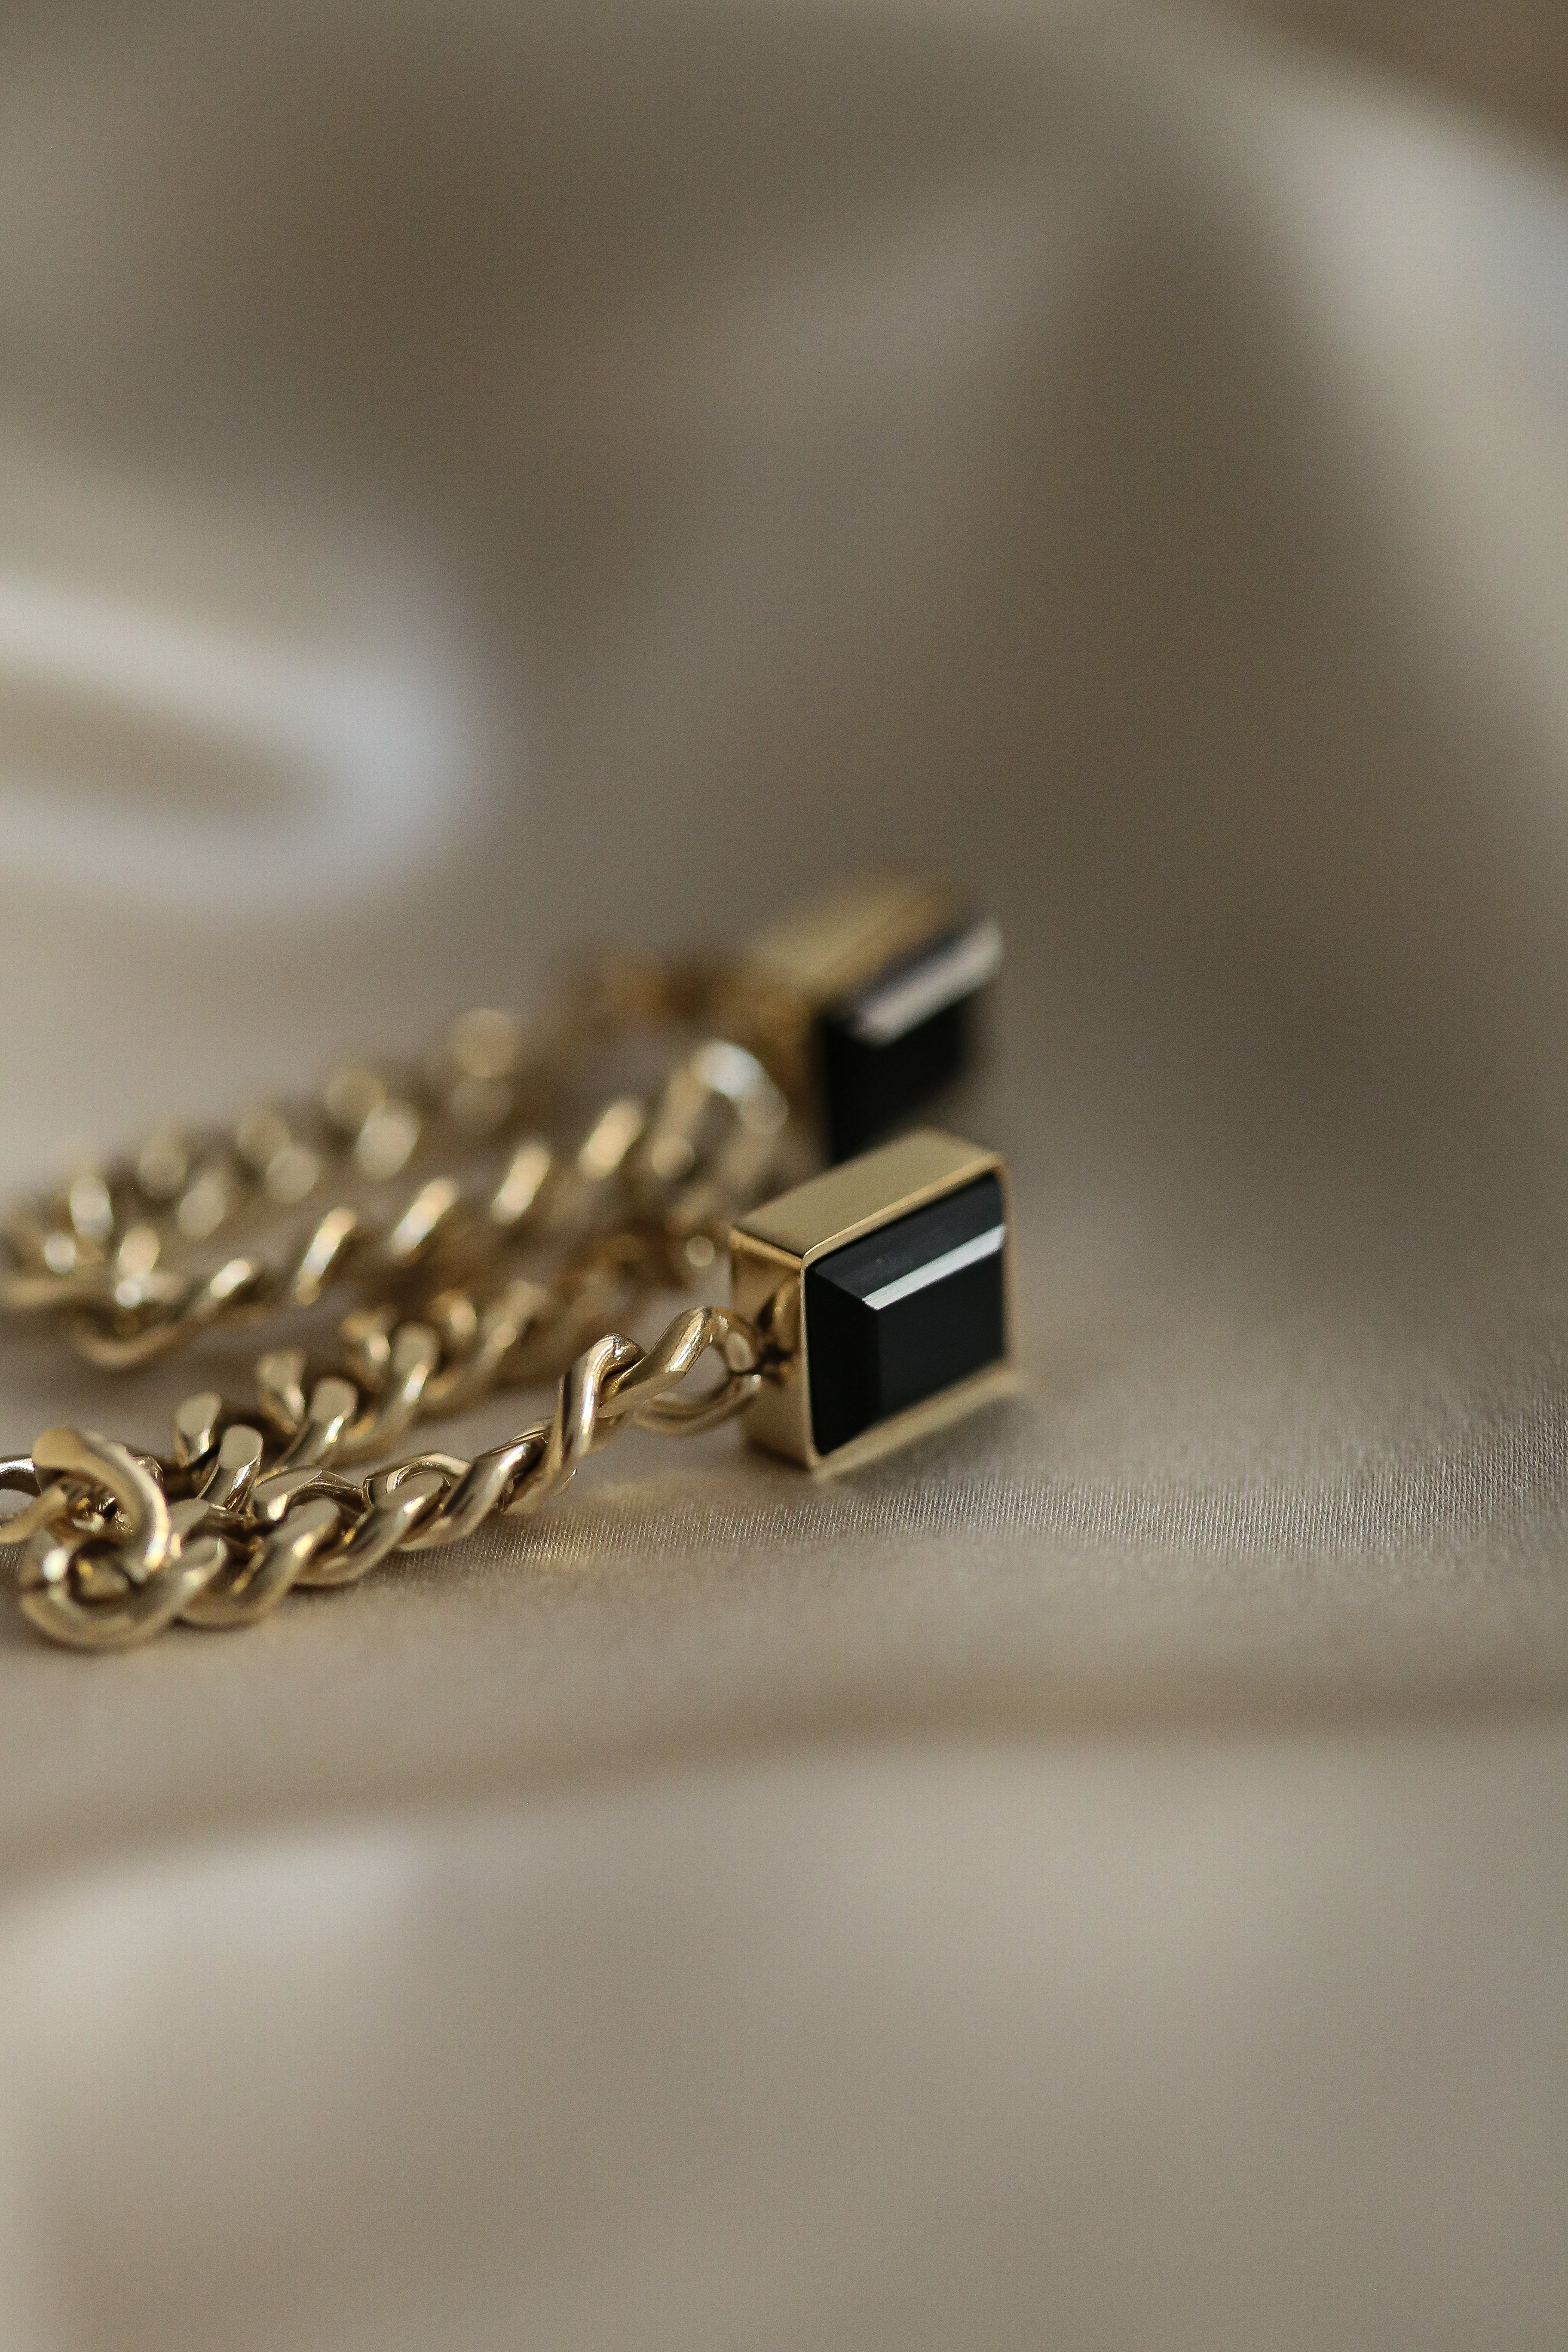 Odette Earrings - Boutique Minimaliste has waterproof, durable, elegant and vintage inspired jewelry